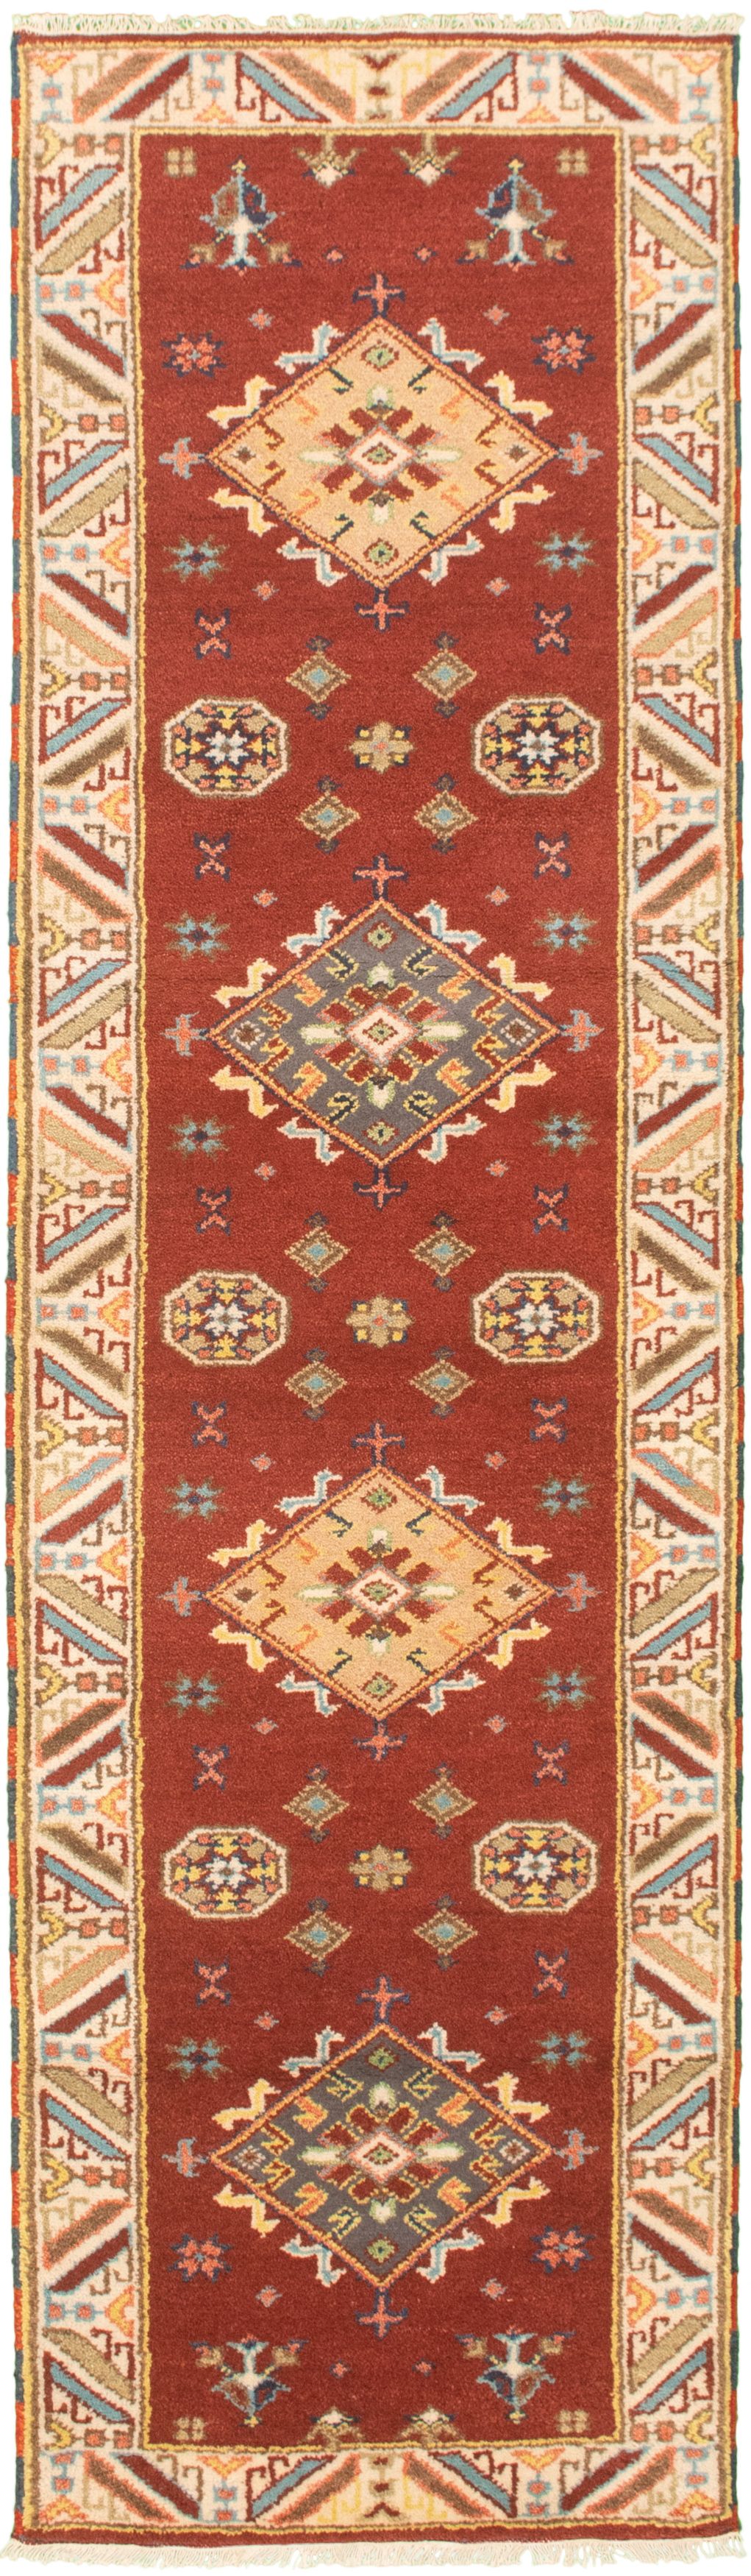 Hand-knotted Royal Kazak Dark Red Wool Rug 2'9" x 9'10"  Size: 2'9" x 9'10"  